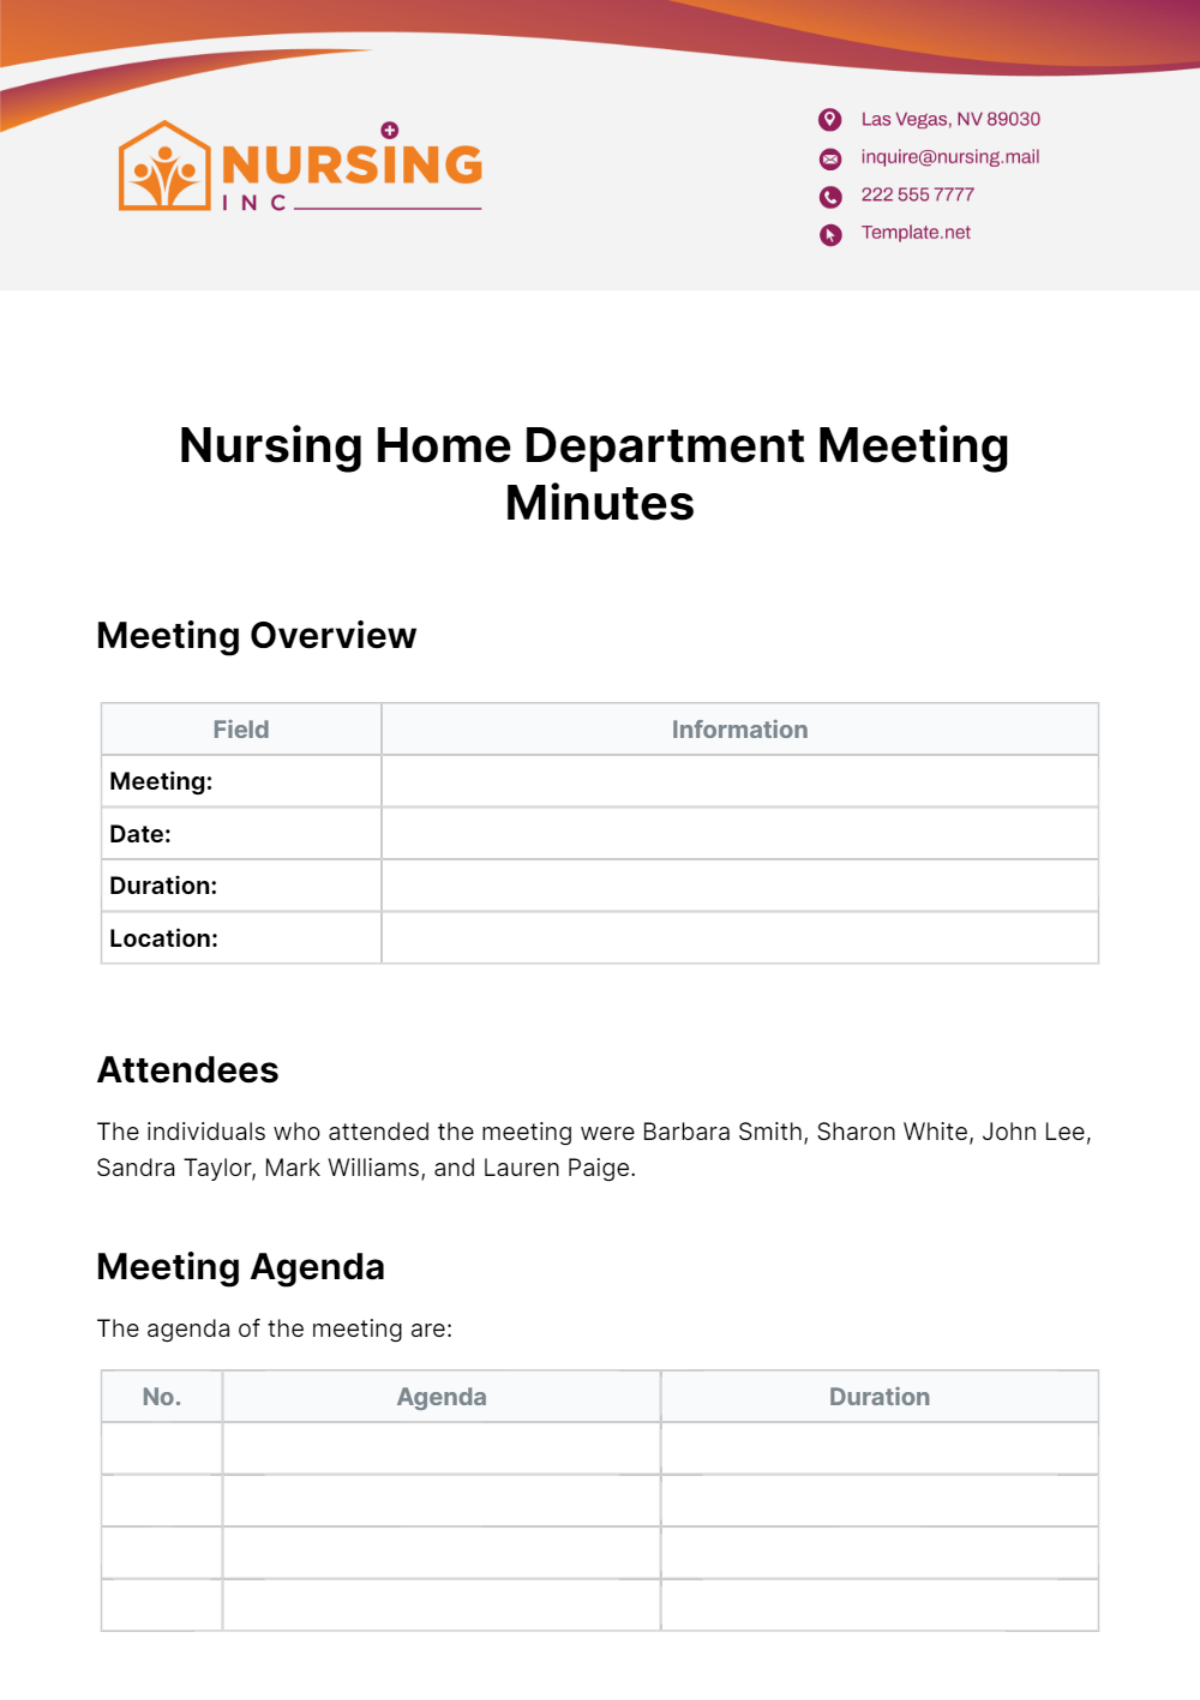 Nursing Home Department Meeting Minutes Template